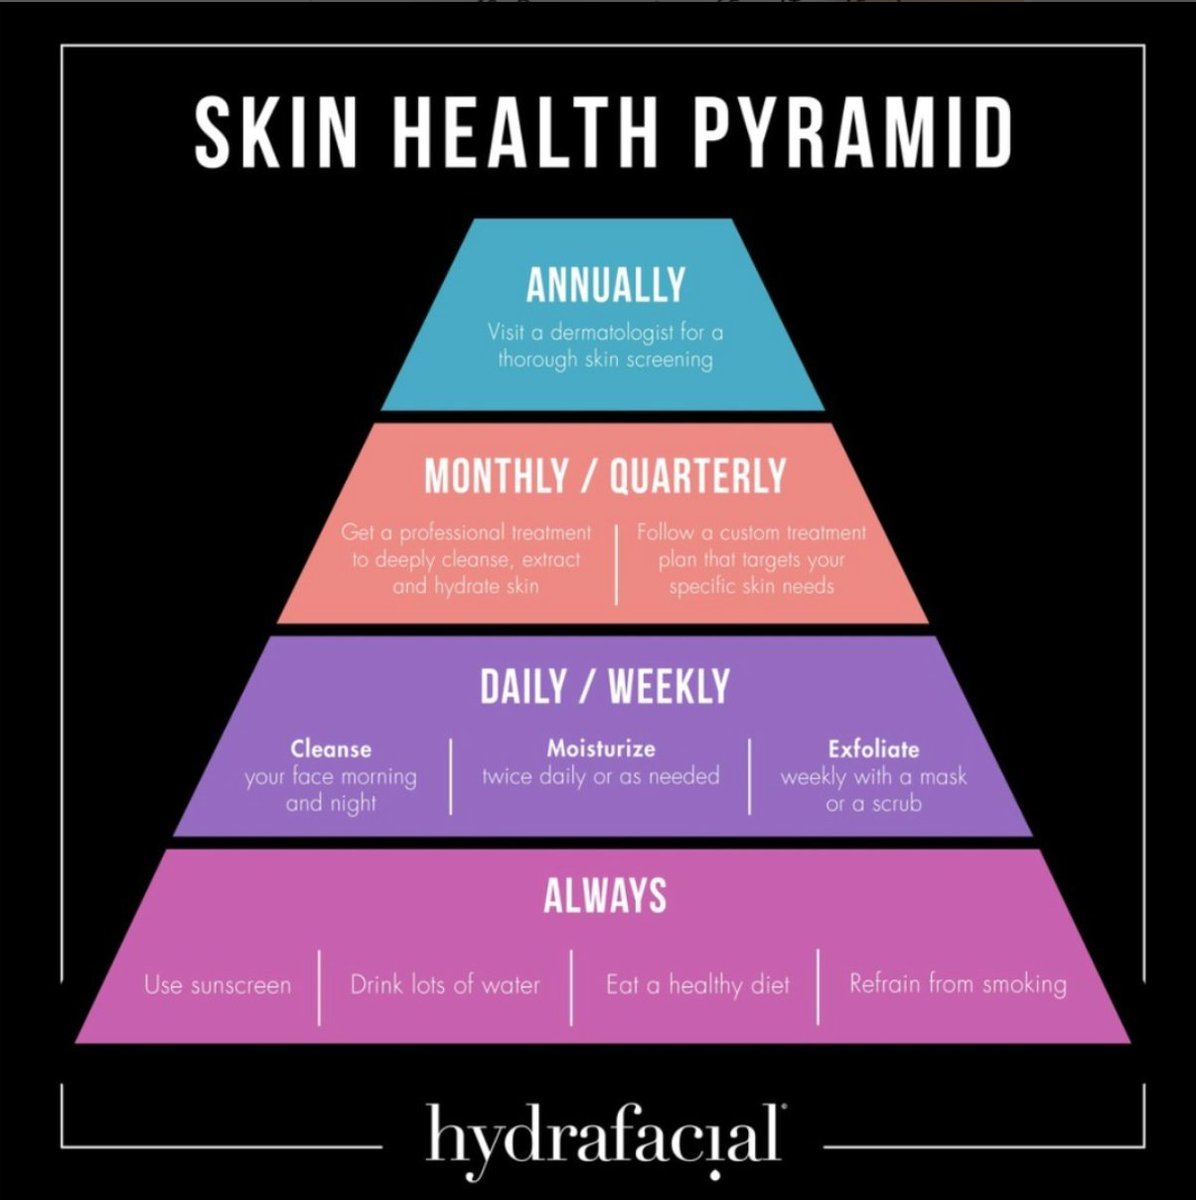 Skin Health Pyramid
SKIN LIFE!
How do you do your skin care?

#hydrafacial #facialspa #facial #facials #spa #bestinthebay #microdermabrasion #facialmasks #sanramonca #danvilleca #walnutcreekca #castrovalleyca #alamoca #pleasantonca